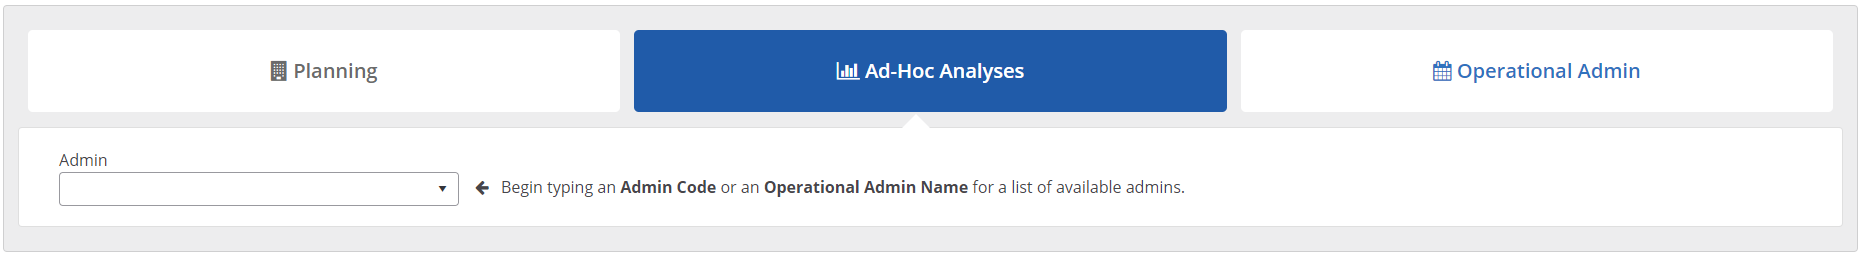 Ad-Hoc Analyses Admin Search